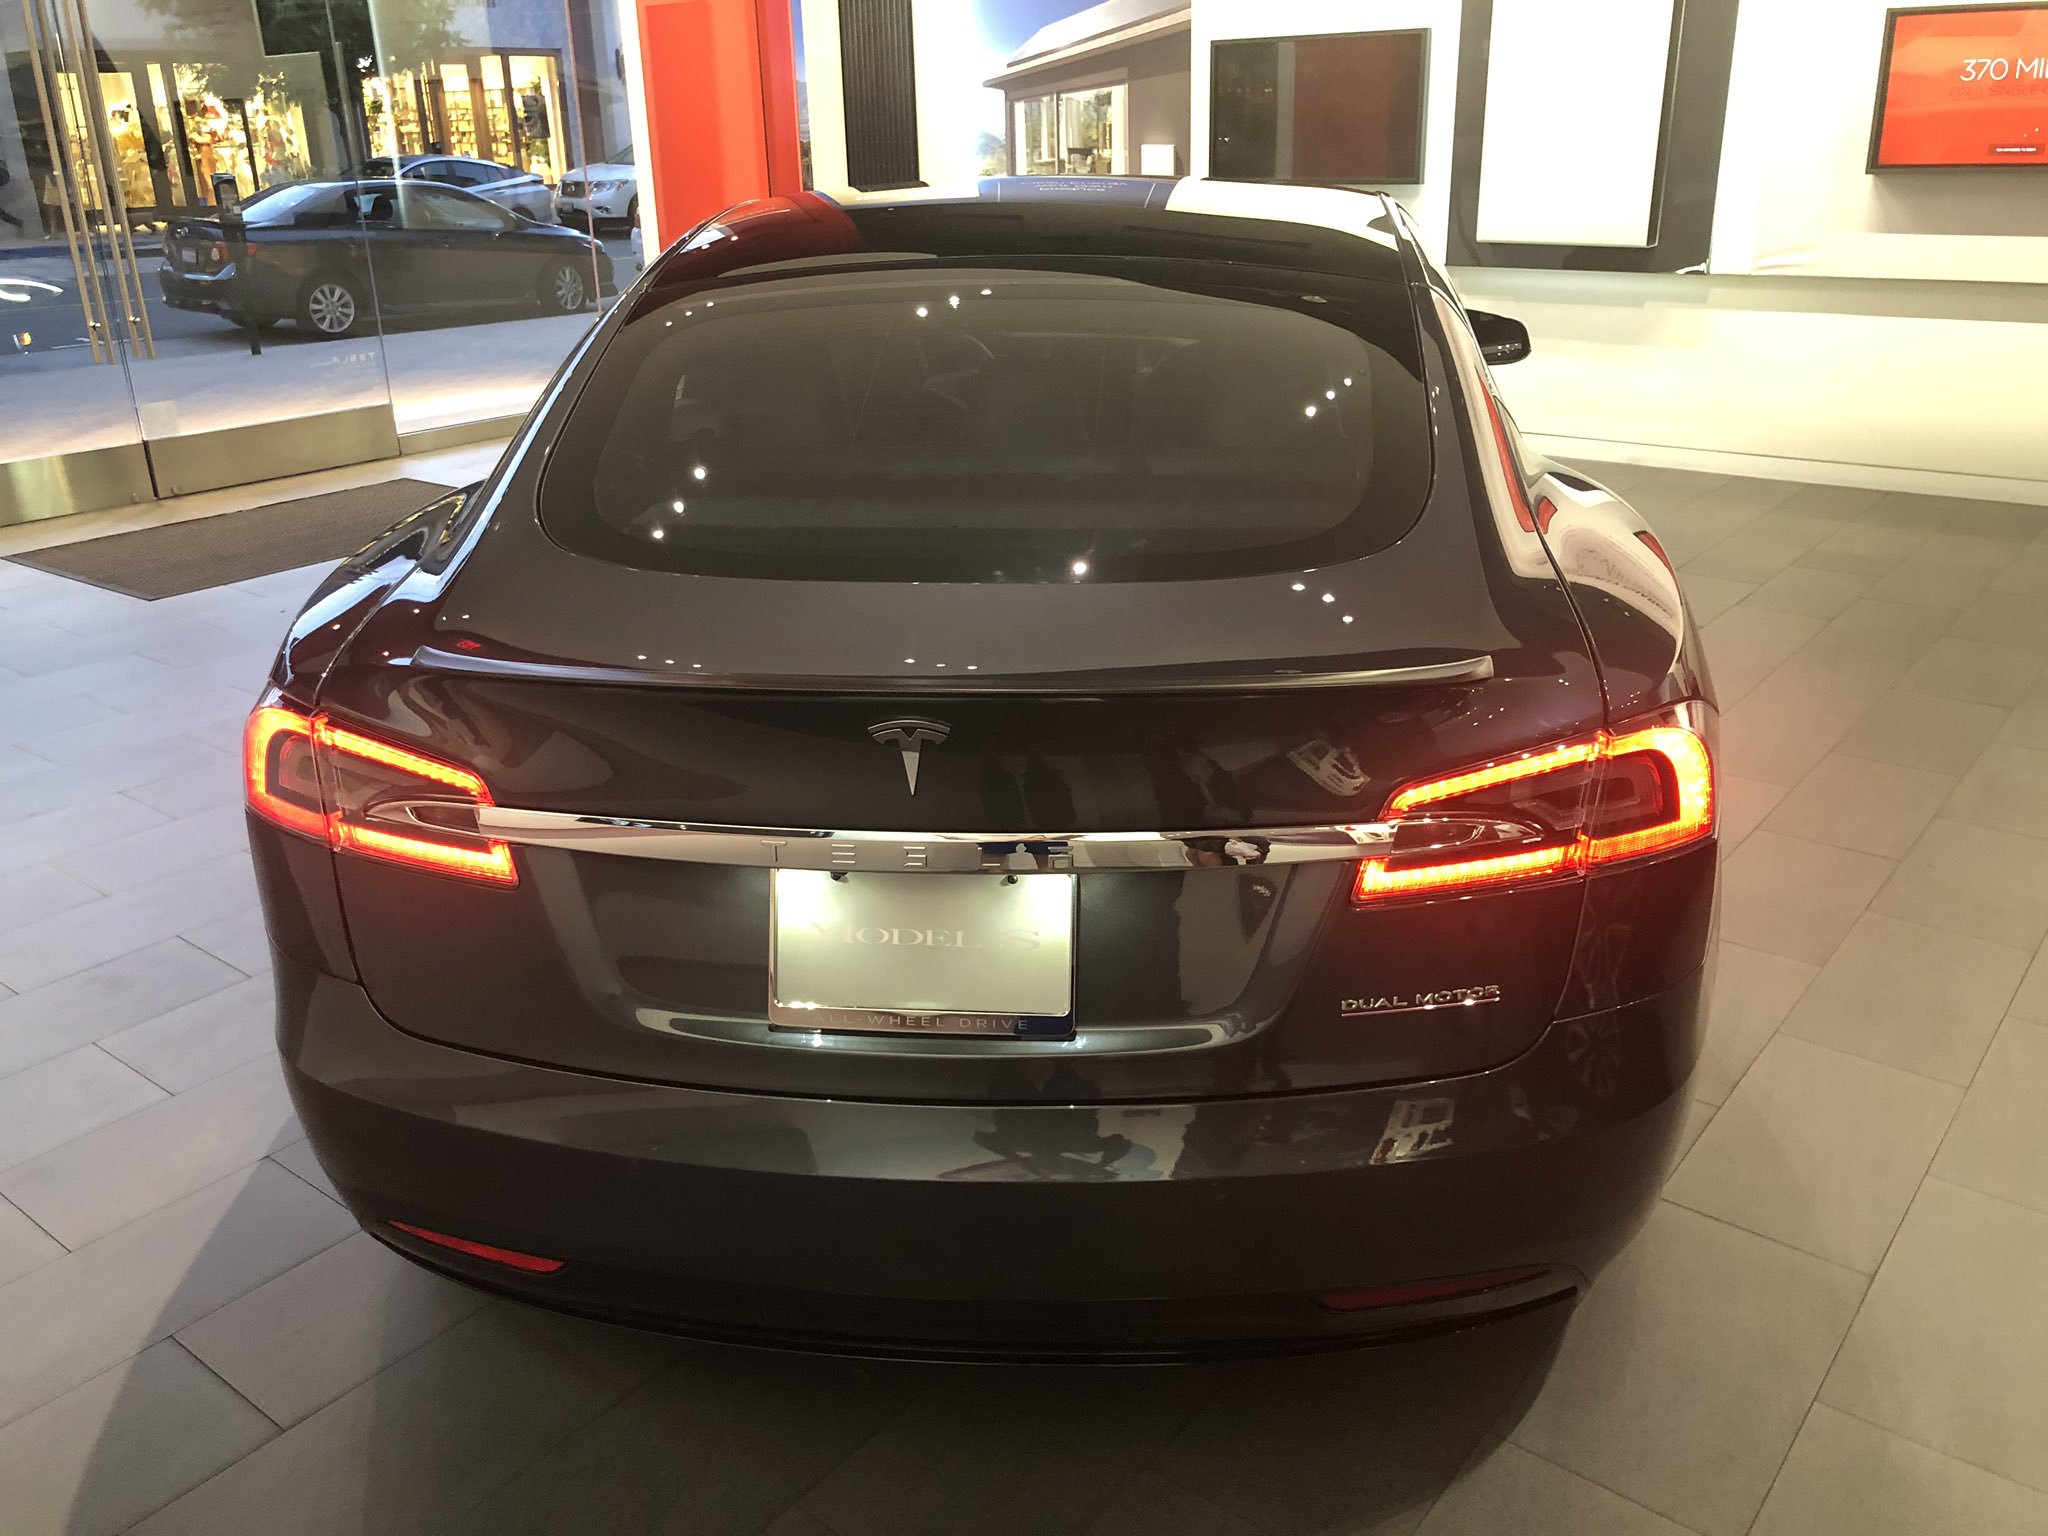 2019 Tesla Model S P100d Price